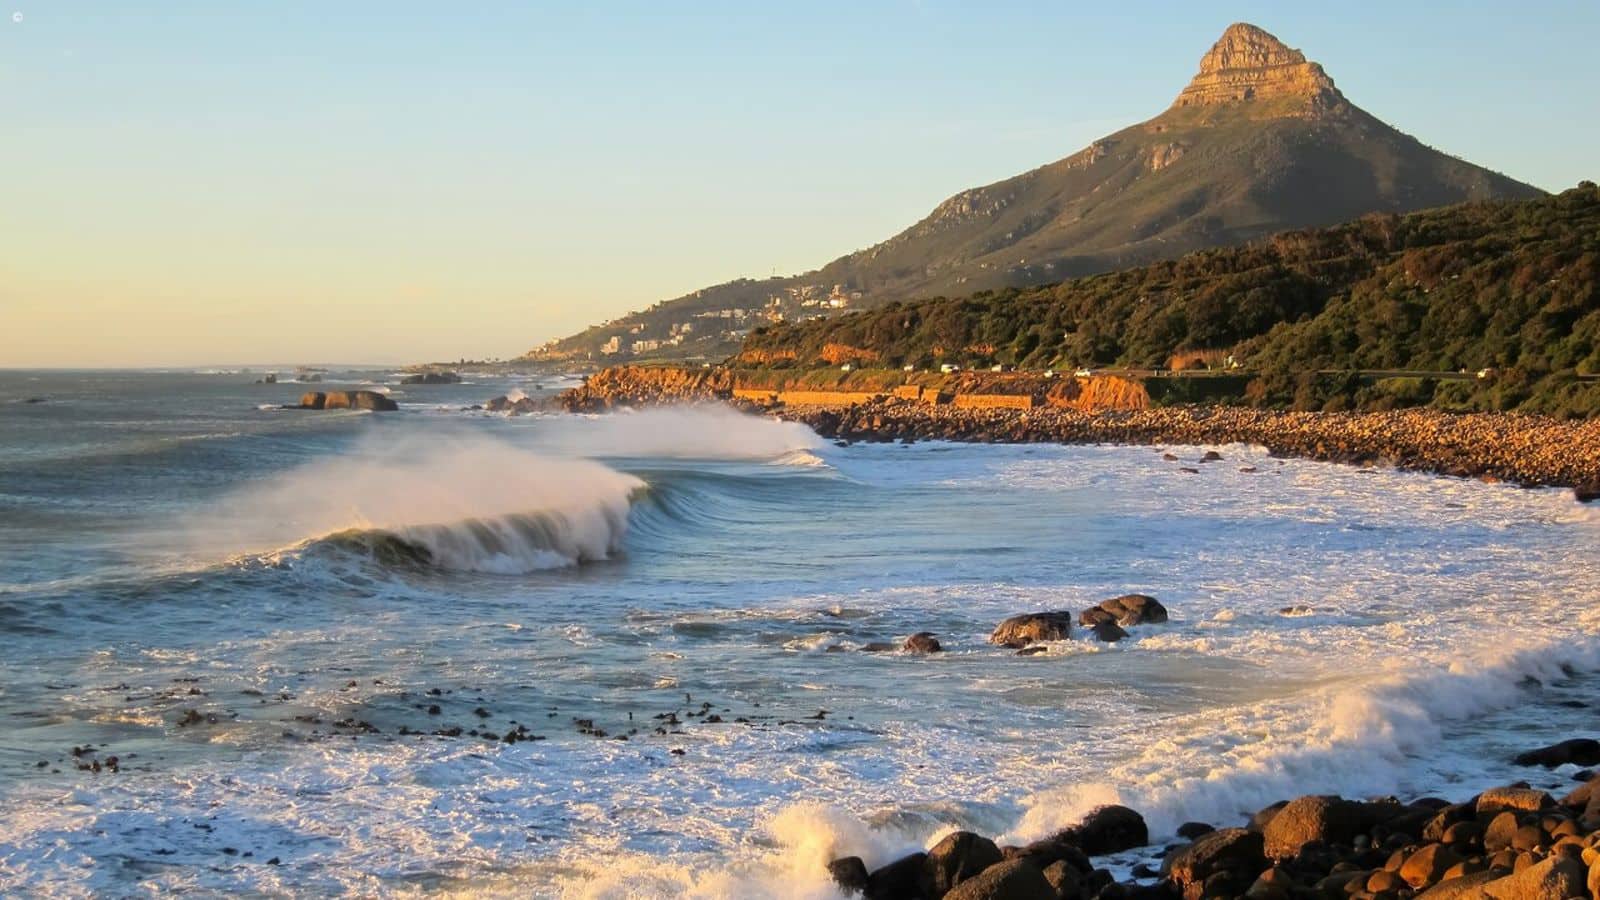 Fun seekers will enjoy Cape Town's kayaking adventures